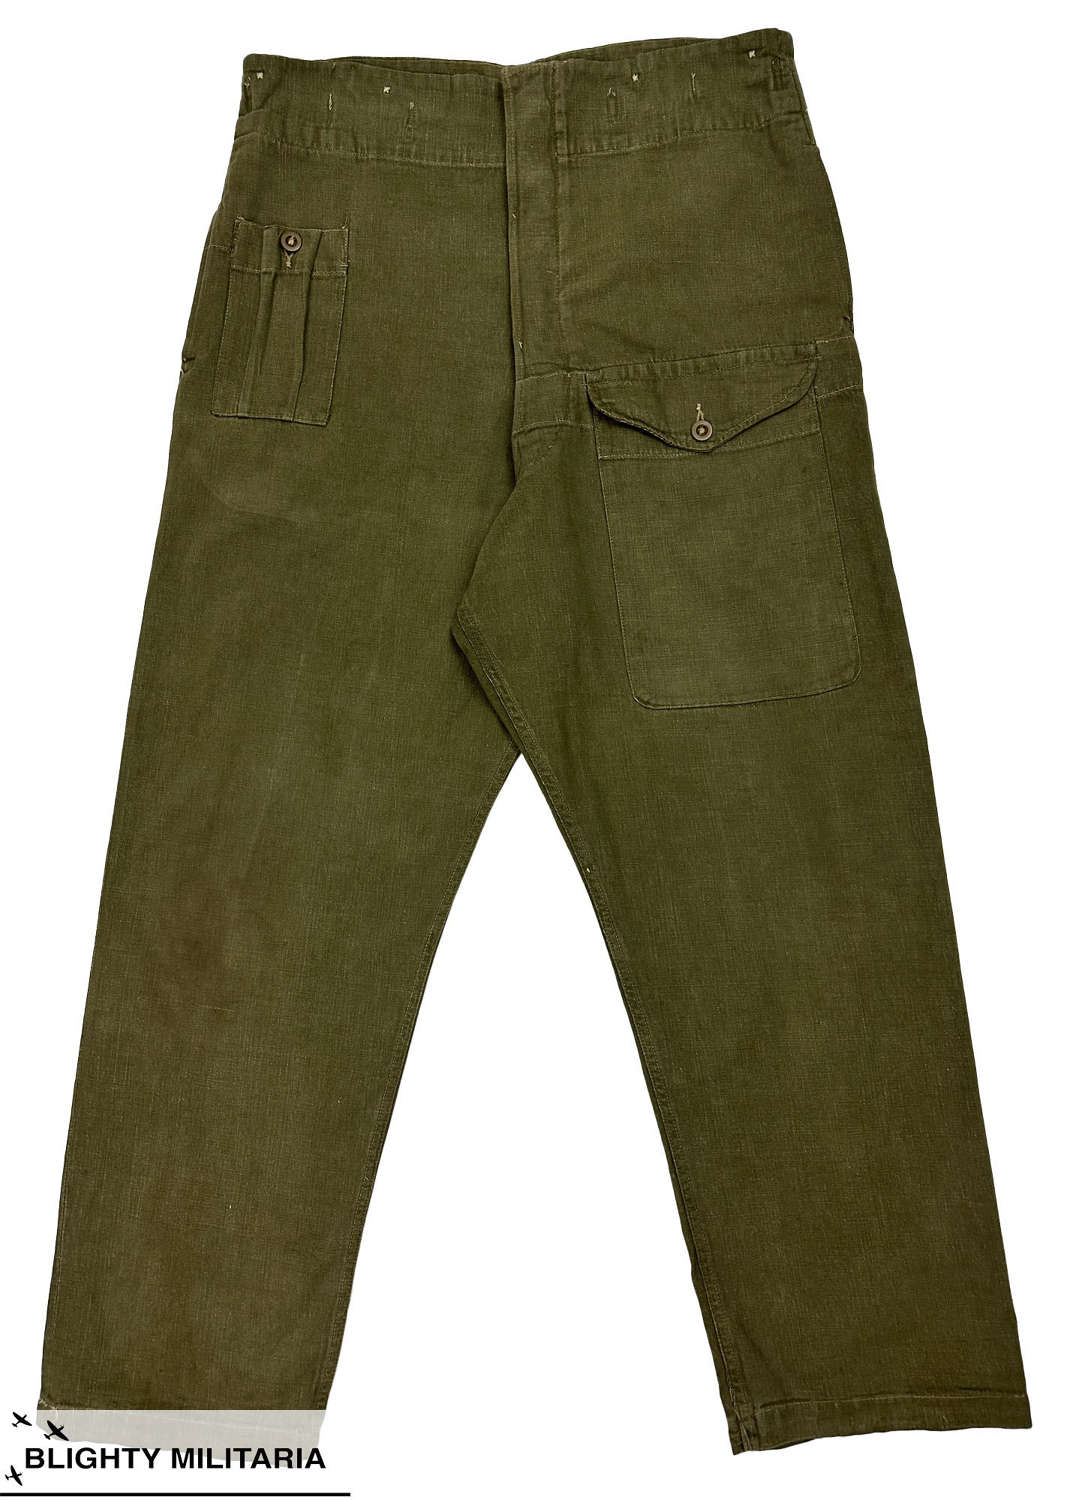 Original 1951 Dated British Denim Battledress Trousers - Size 10